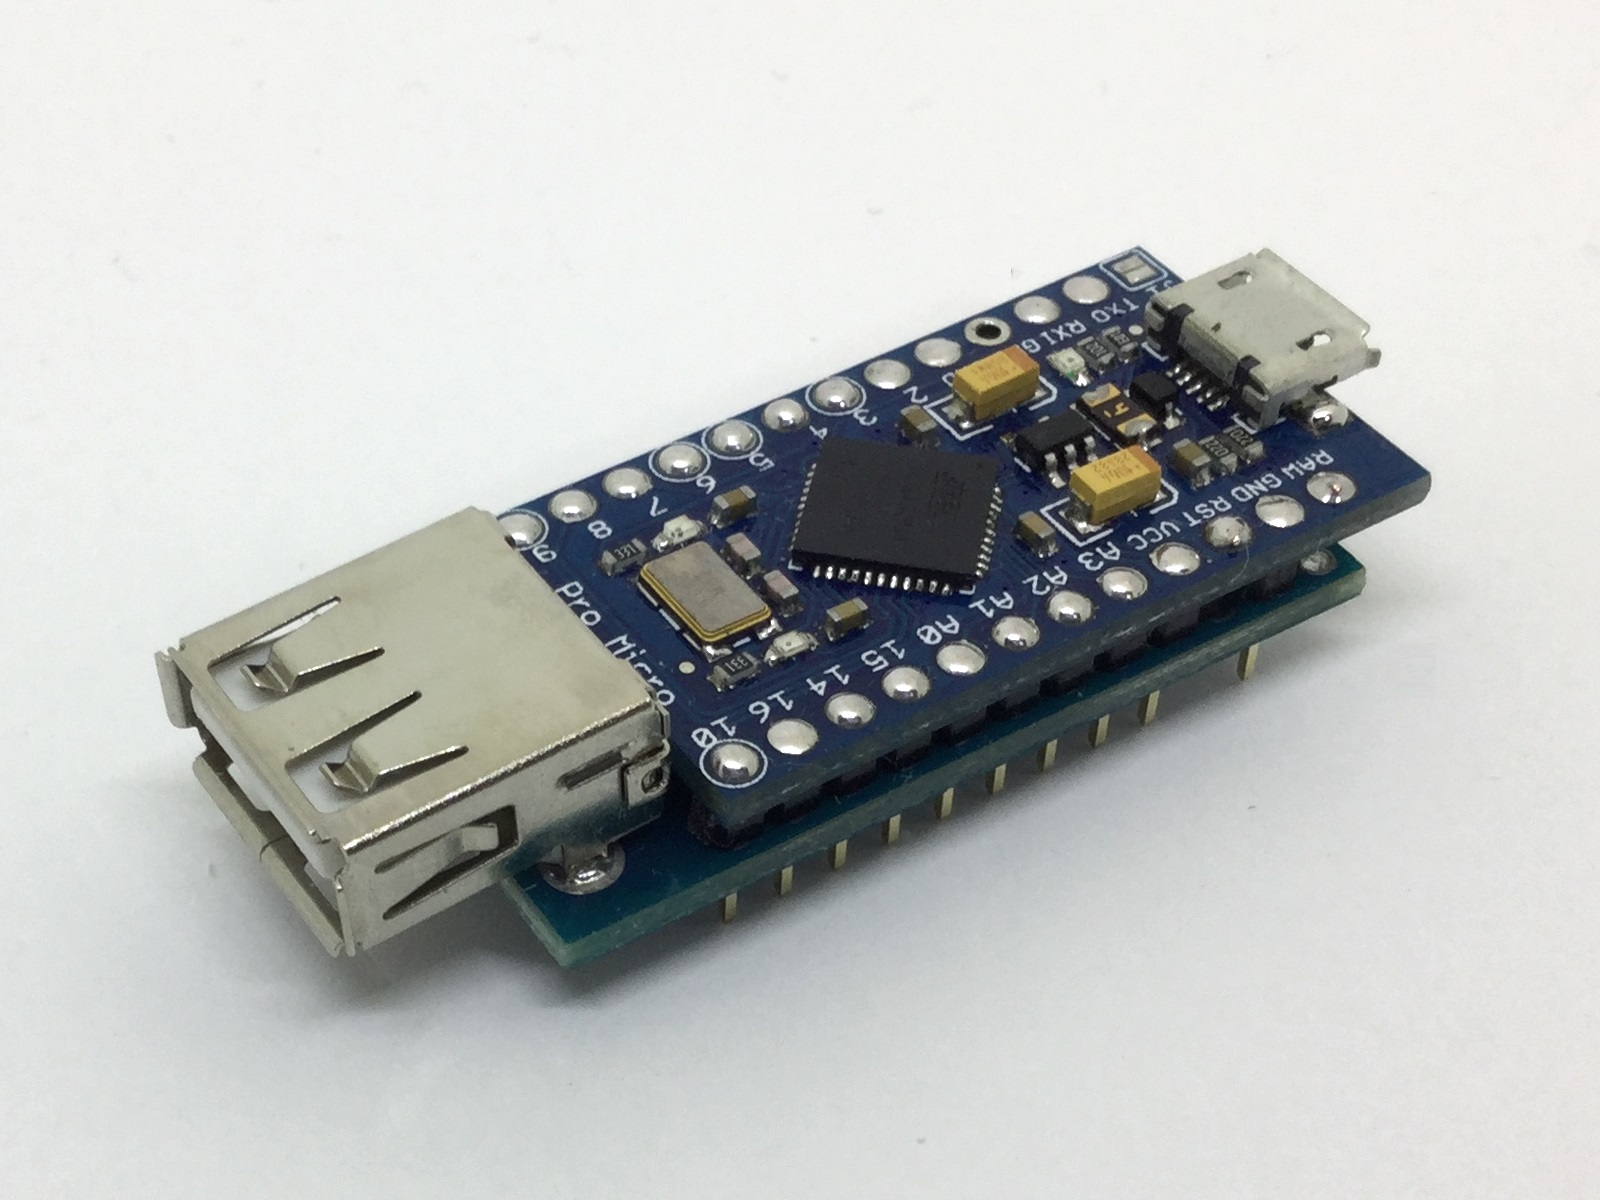 Pro Micro soldered onto USB Host Shield (Source: ht-deko.com)